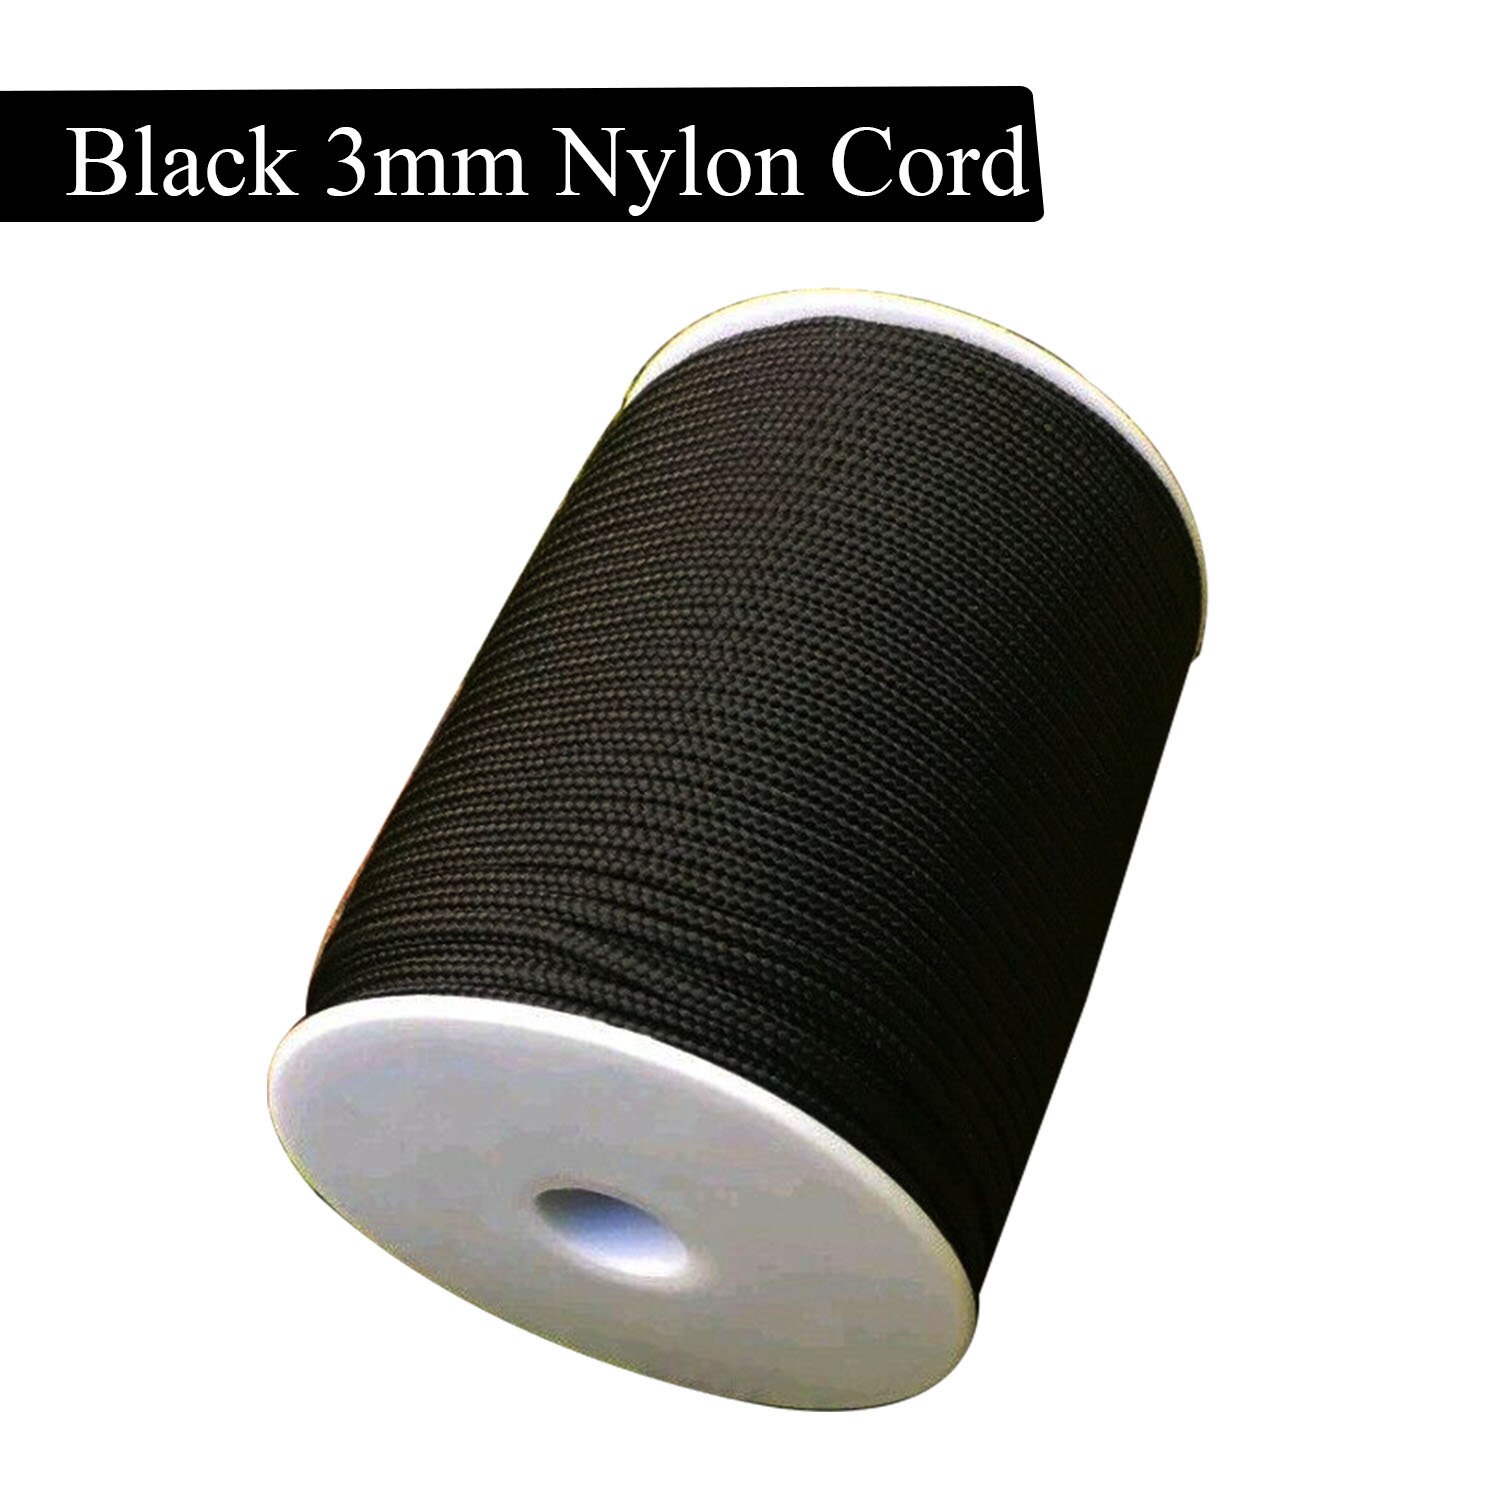 3mm Nylon Cord Black & White Braided Cord for Making, Repair